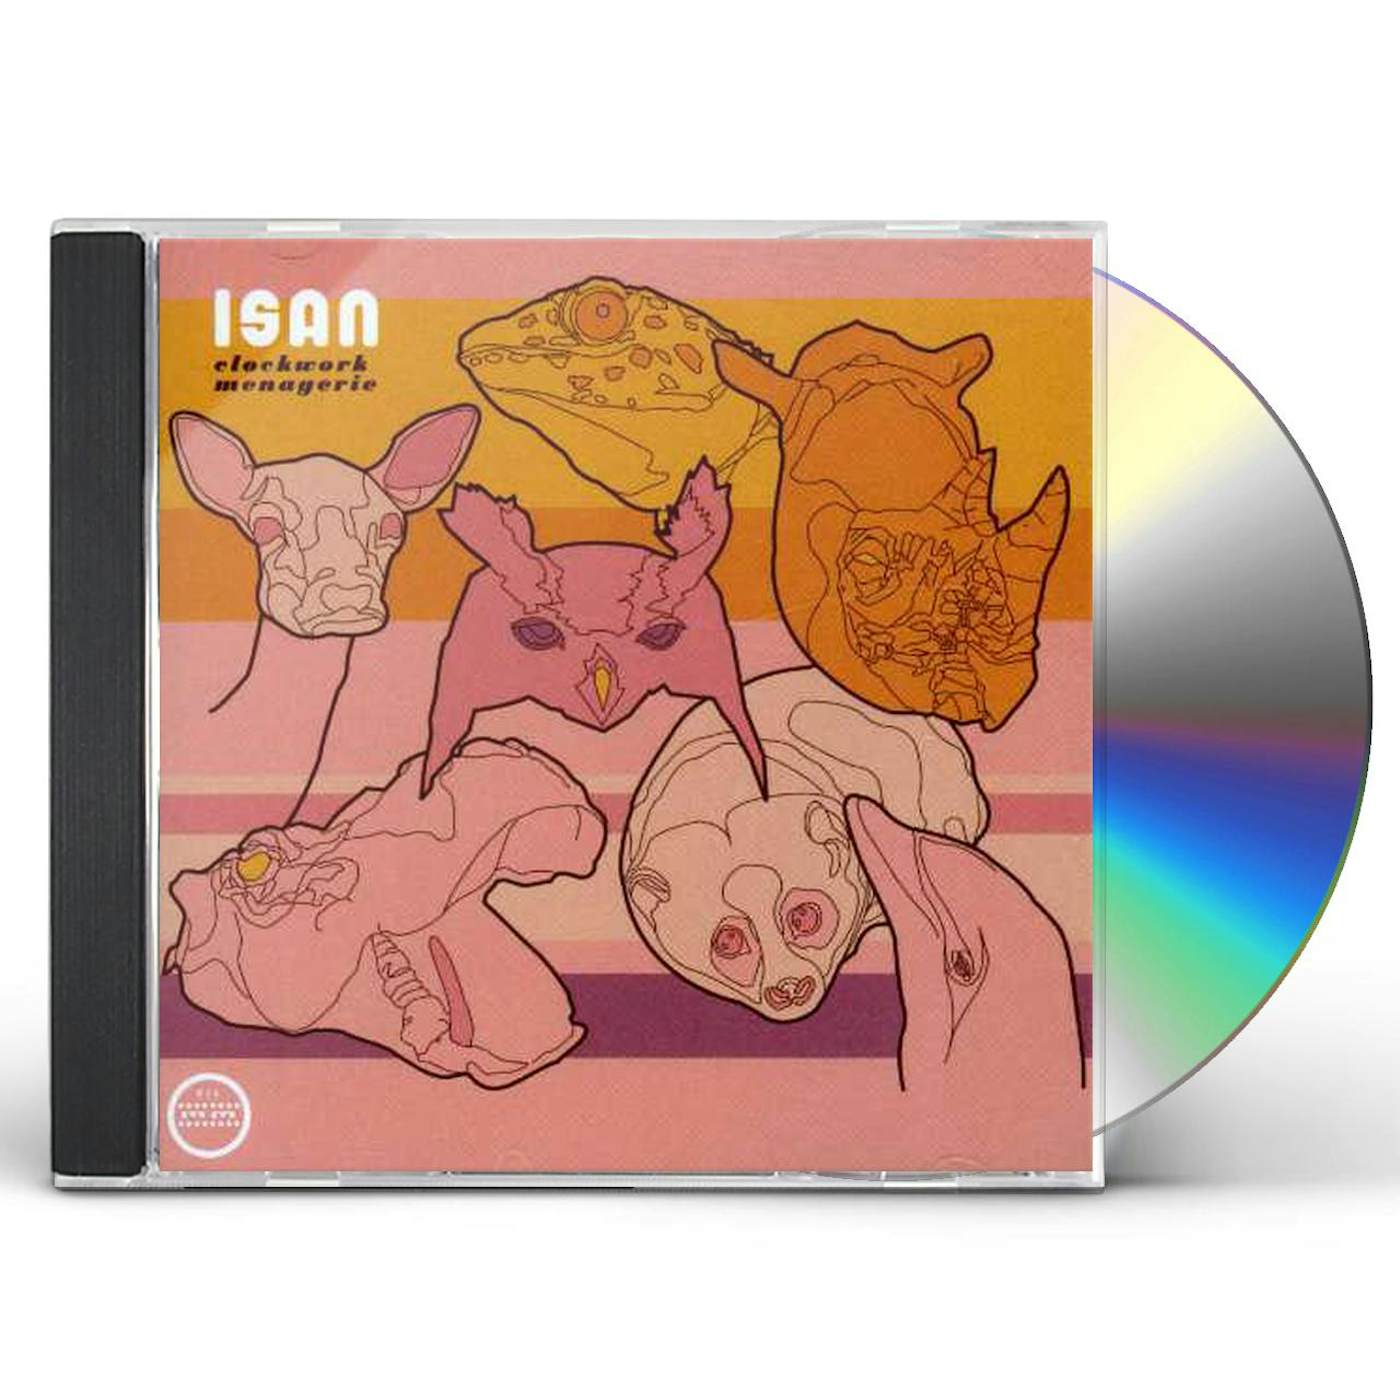 Isan CLOCKWORK MENAGERIE CD